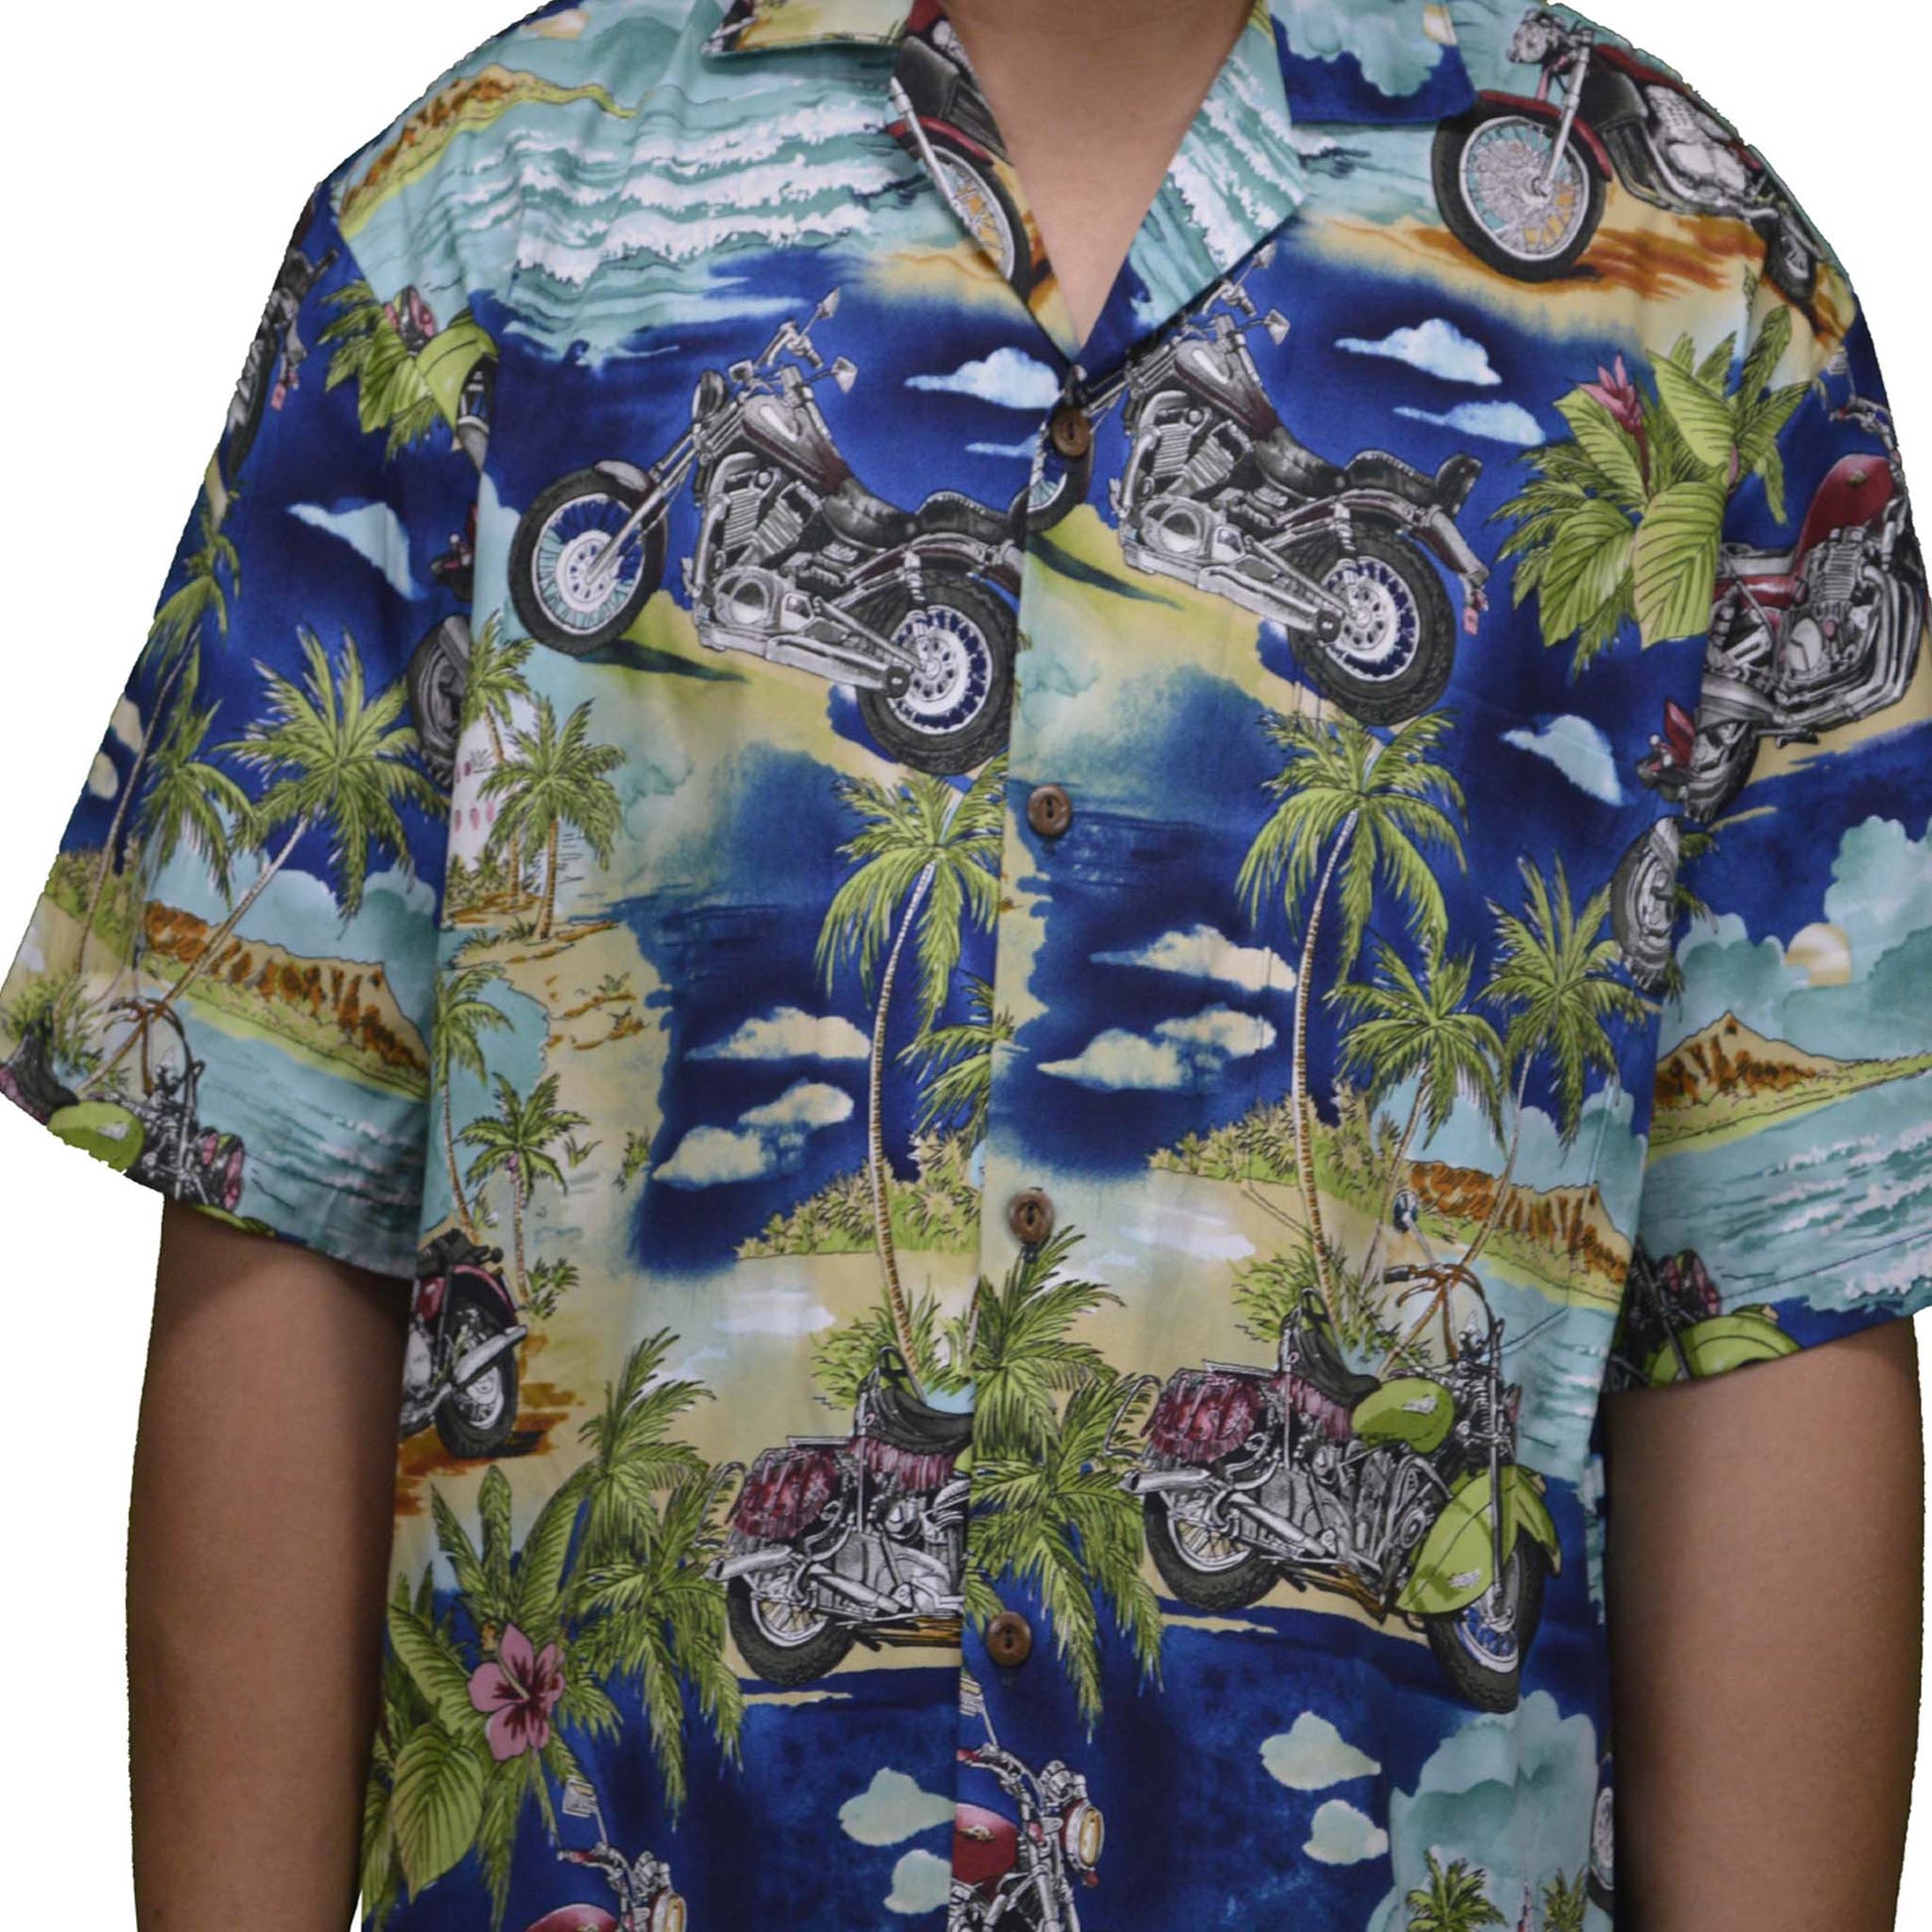 authentic hawaiian shirt from honolulu with motorcycle scene